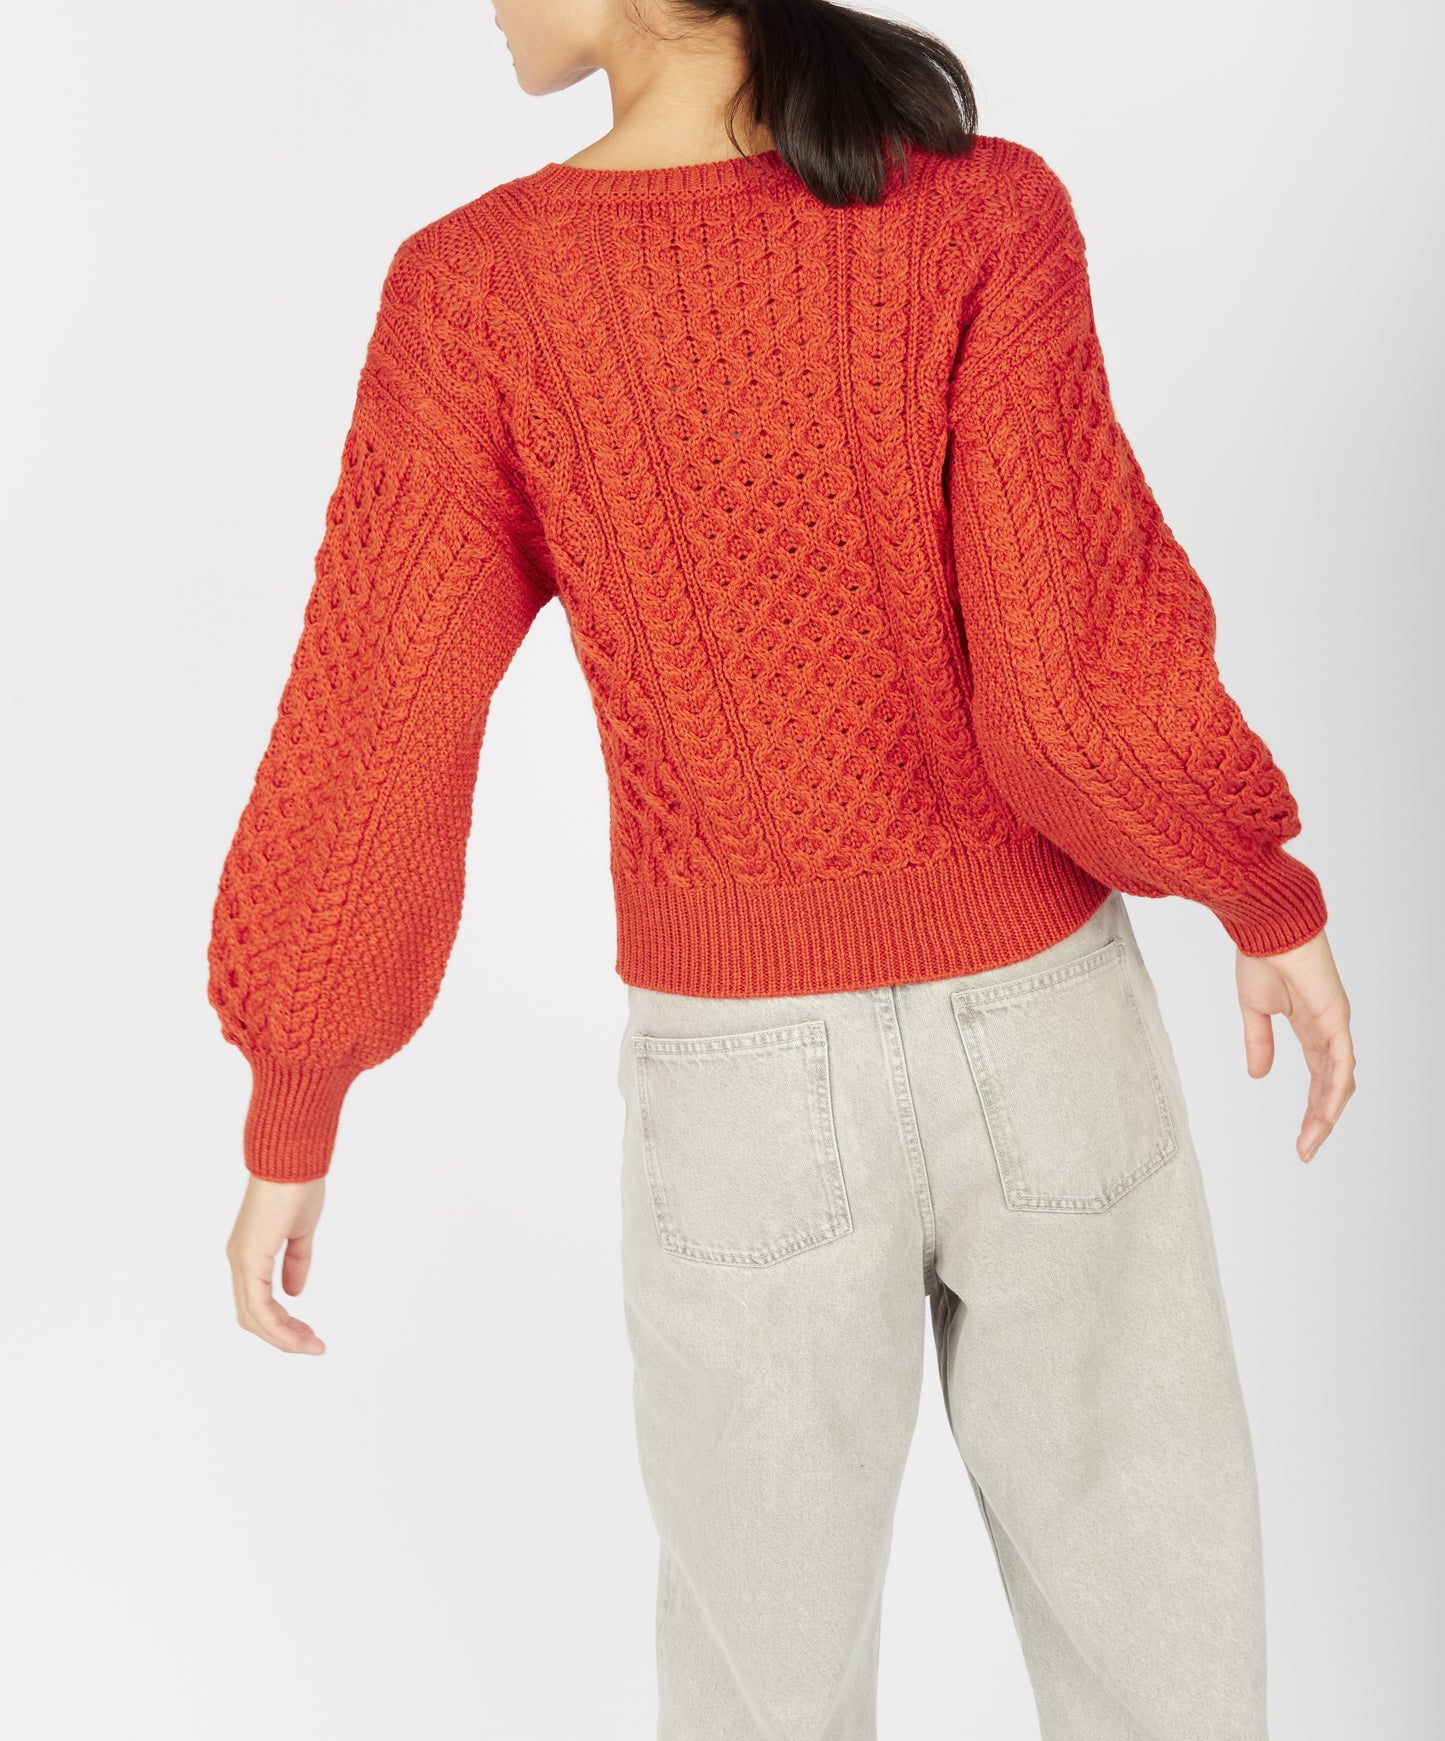 IrelandsEye Knitwear Honeysuckle Cropped Aran Sweater Orange Marl